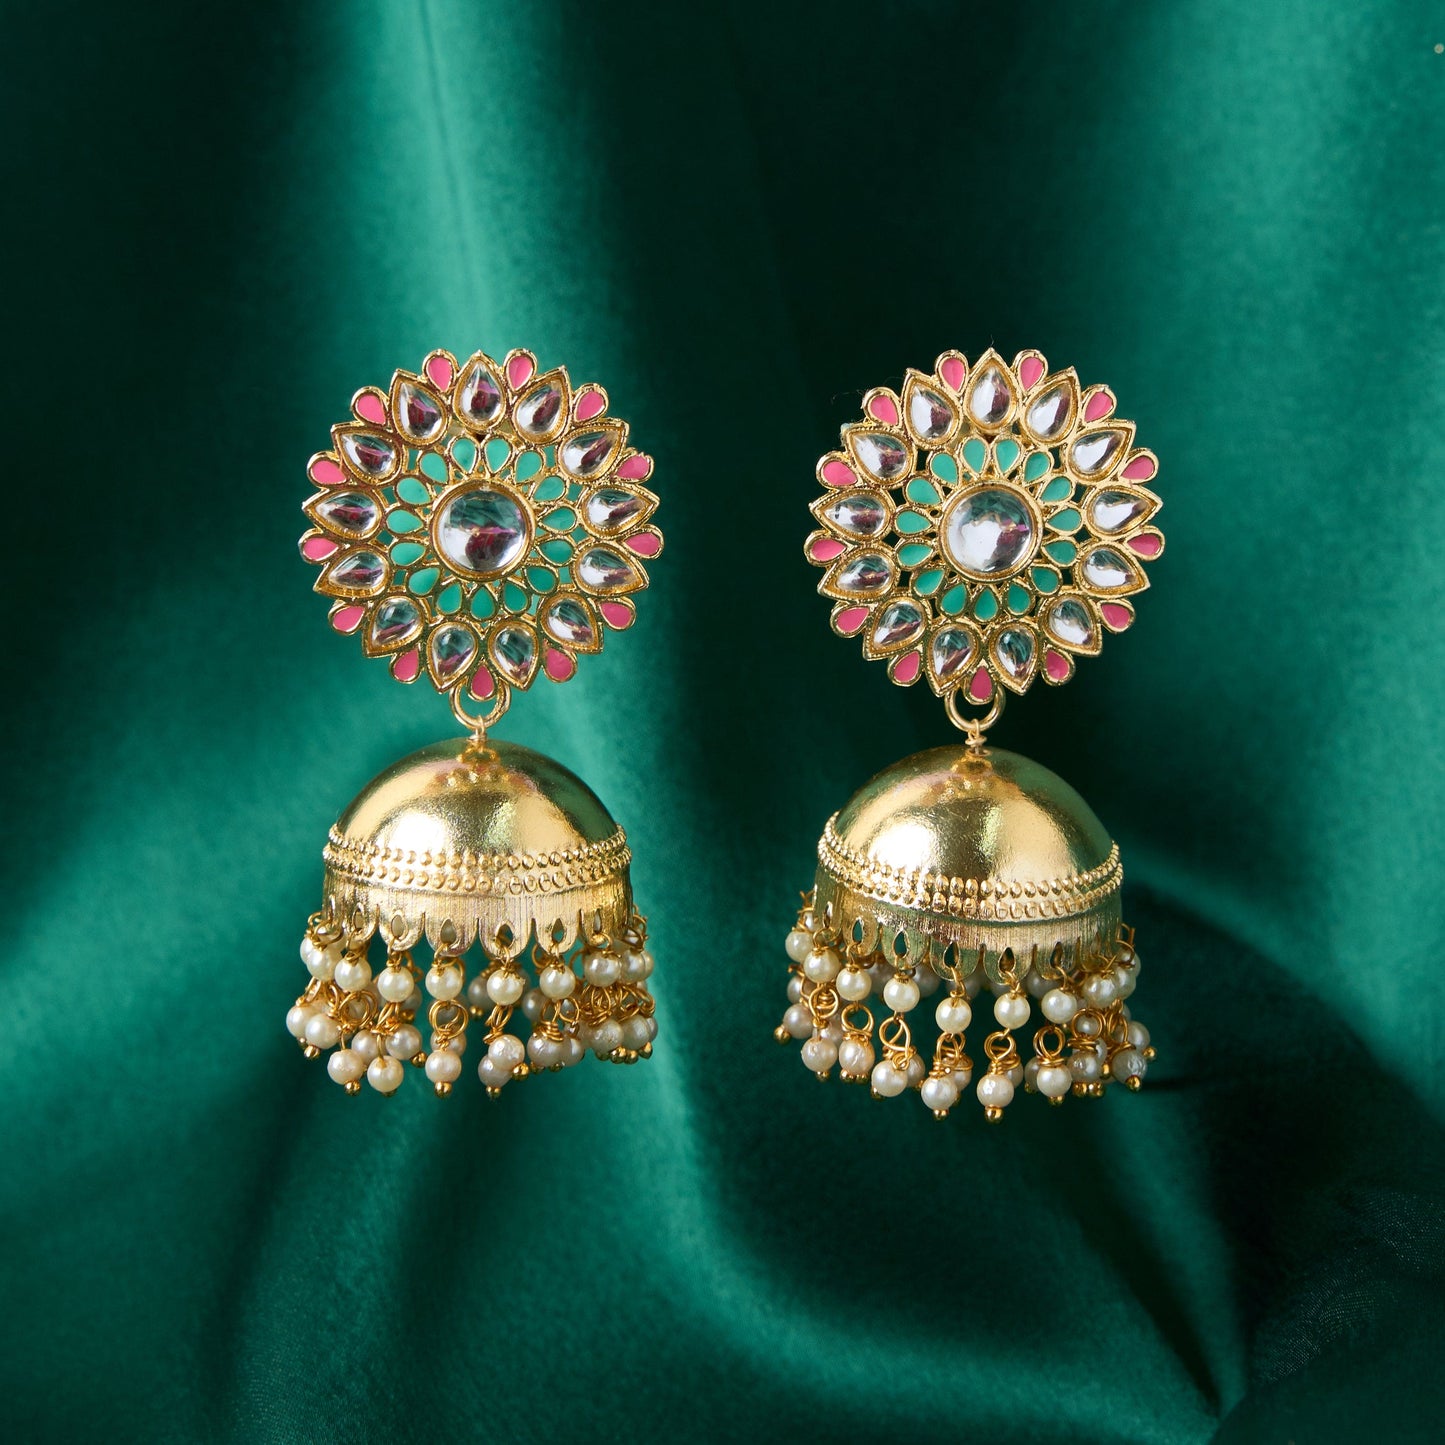 Moonstruck Traditional Inidian Golden Jhumka/Jhumki Earrings With Pearls for Women (Green, Pink) - www.MoonstruckINC.com